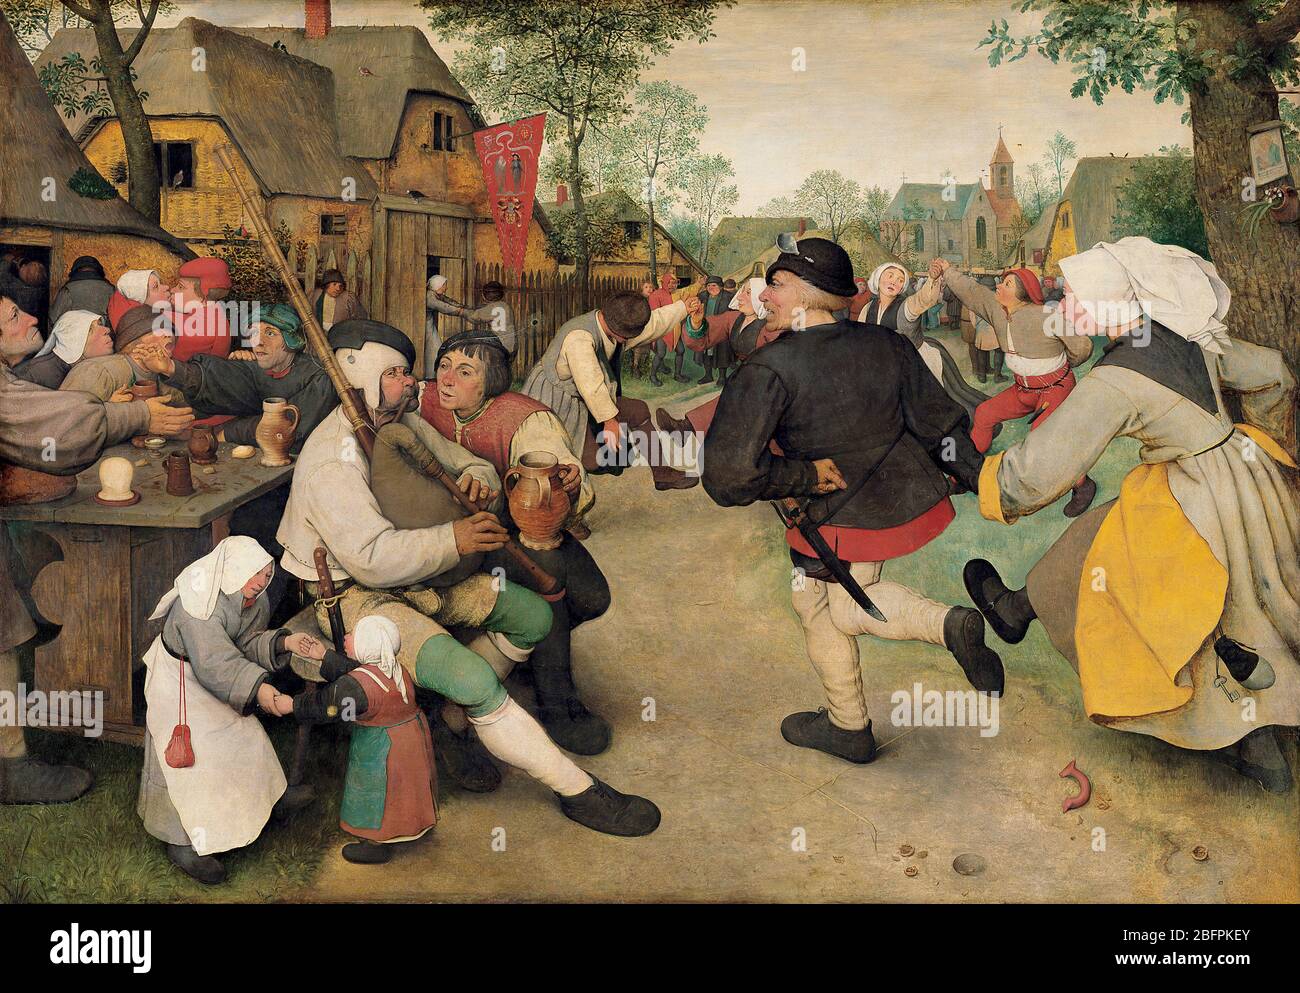 The Peasant Dance by Pieter Bruegel the Elder Stock Photo